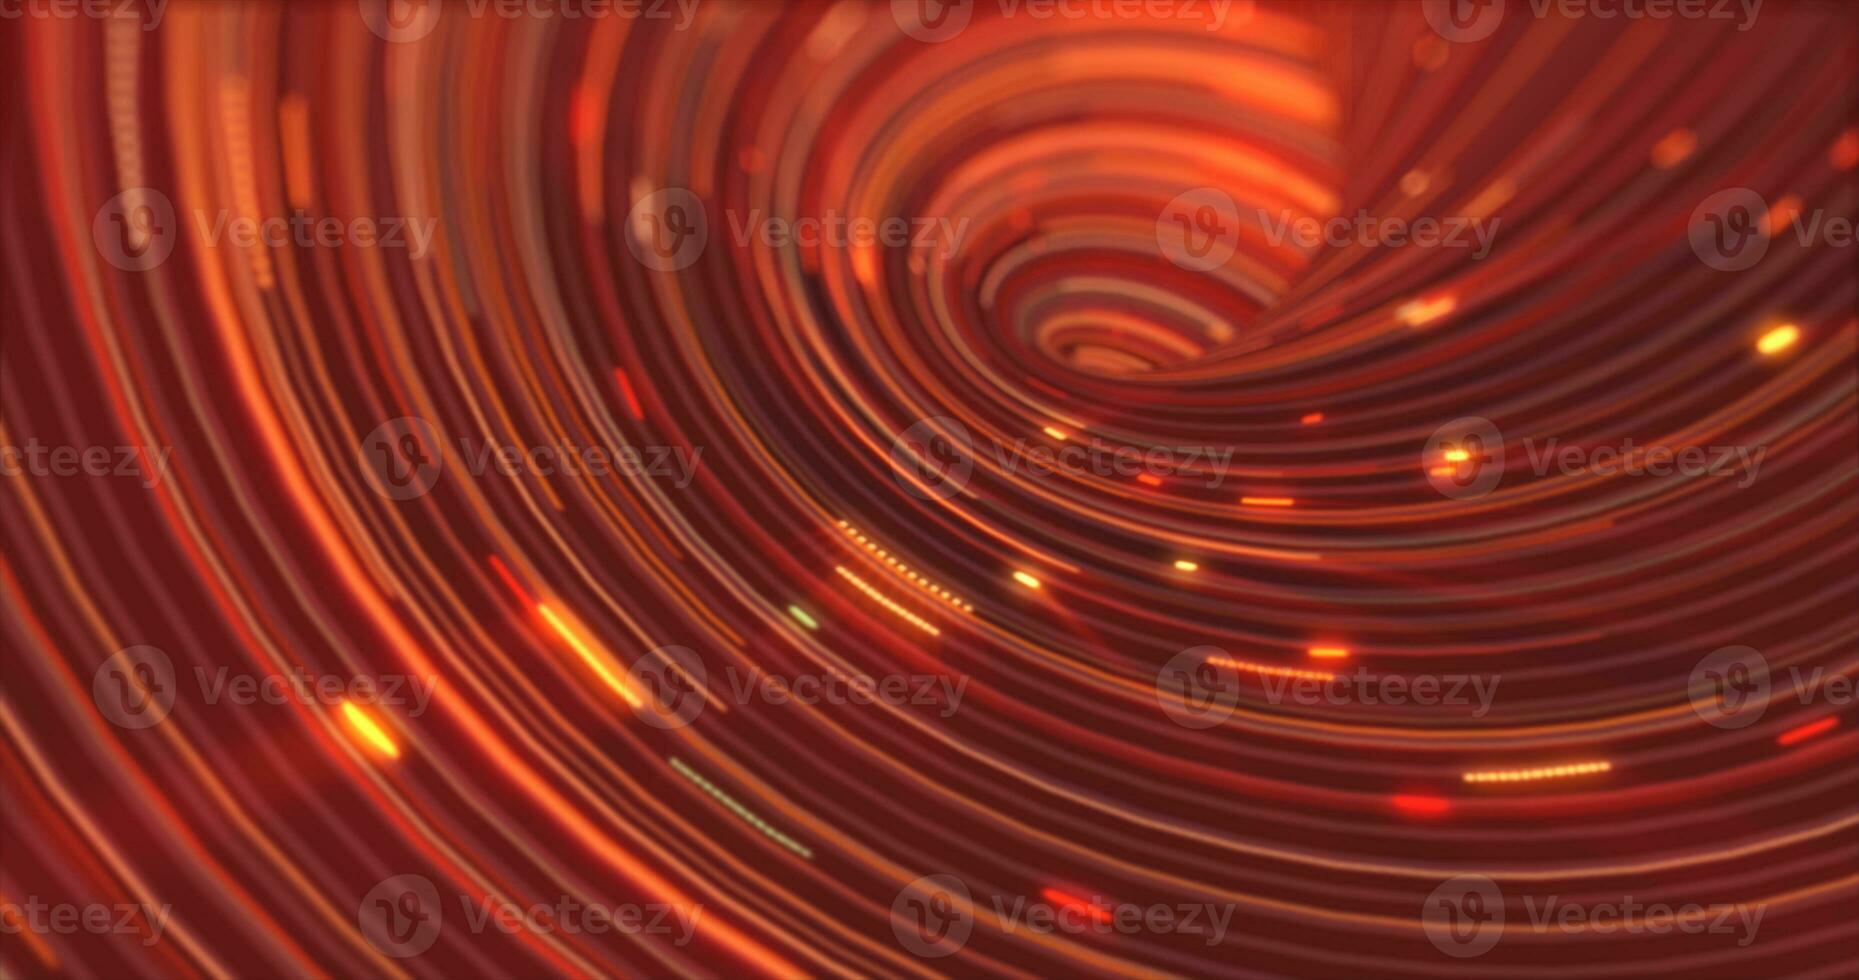 abstrato energia laranja rodopiando curvado linhas do brilhando mágico listras e energia partículas fundo foto